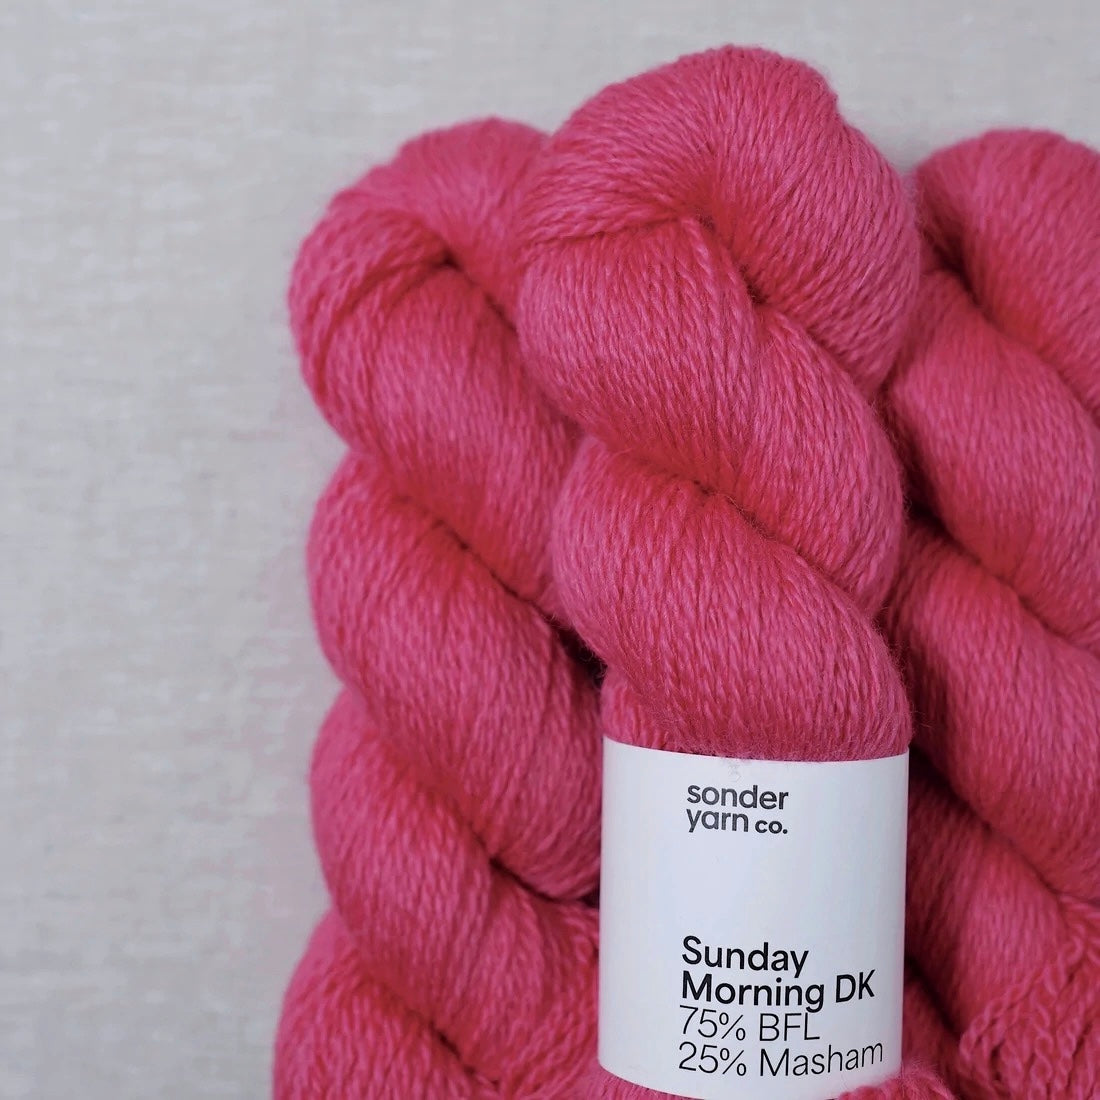 Sunday Morning DK – Sonder Yarn Co., Orange Yarn 